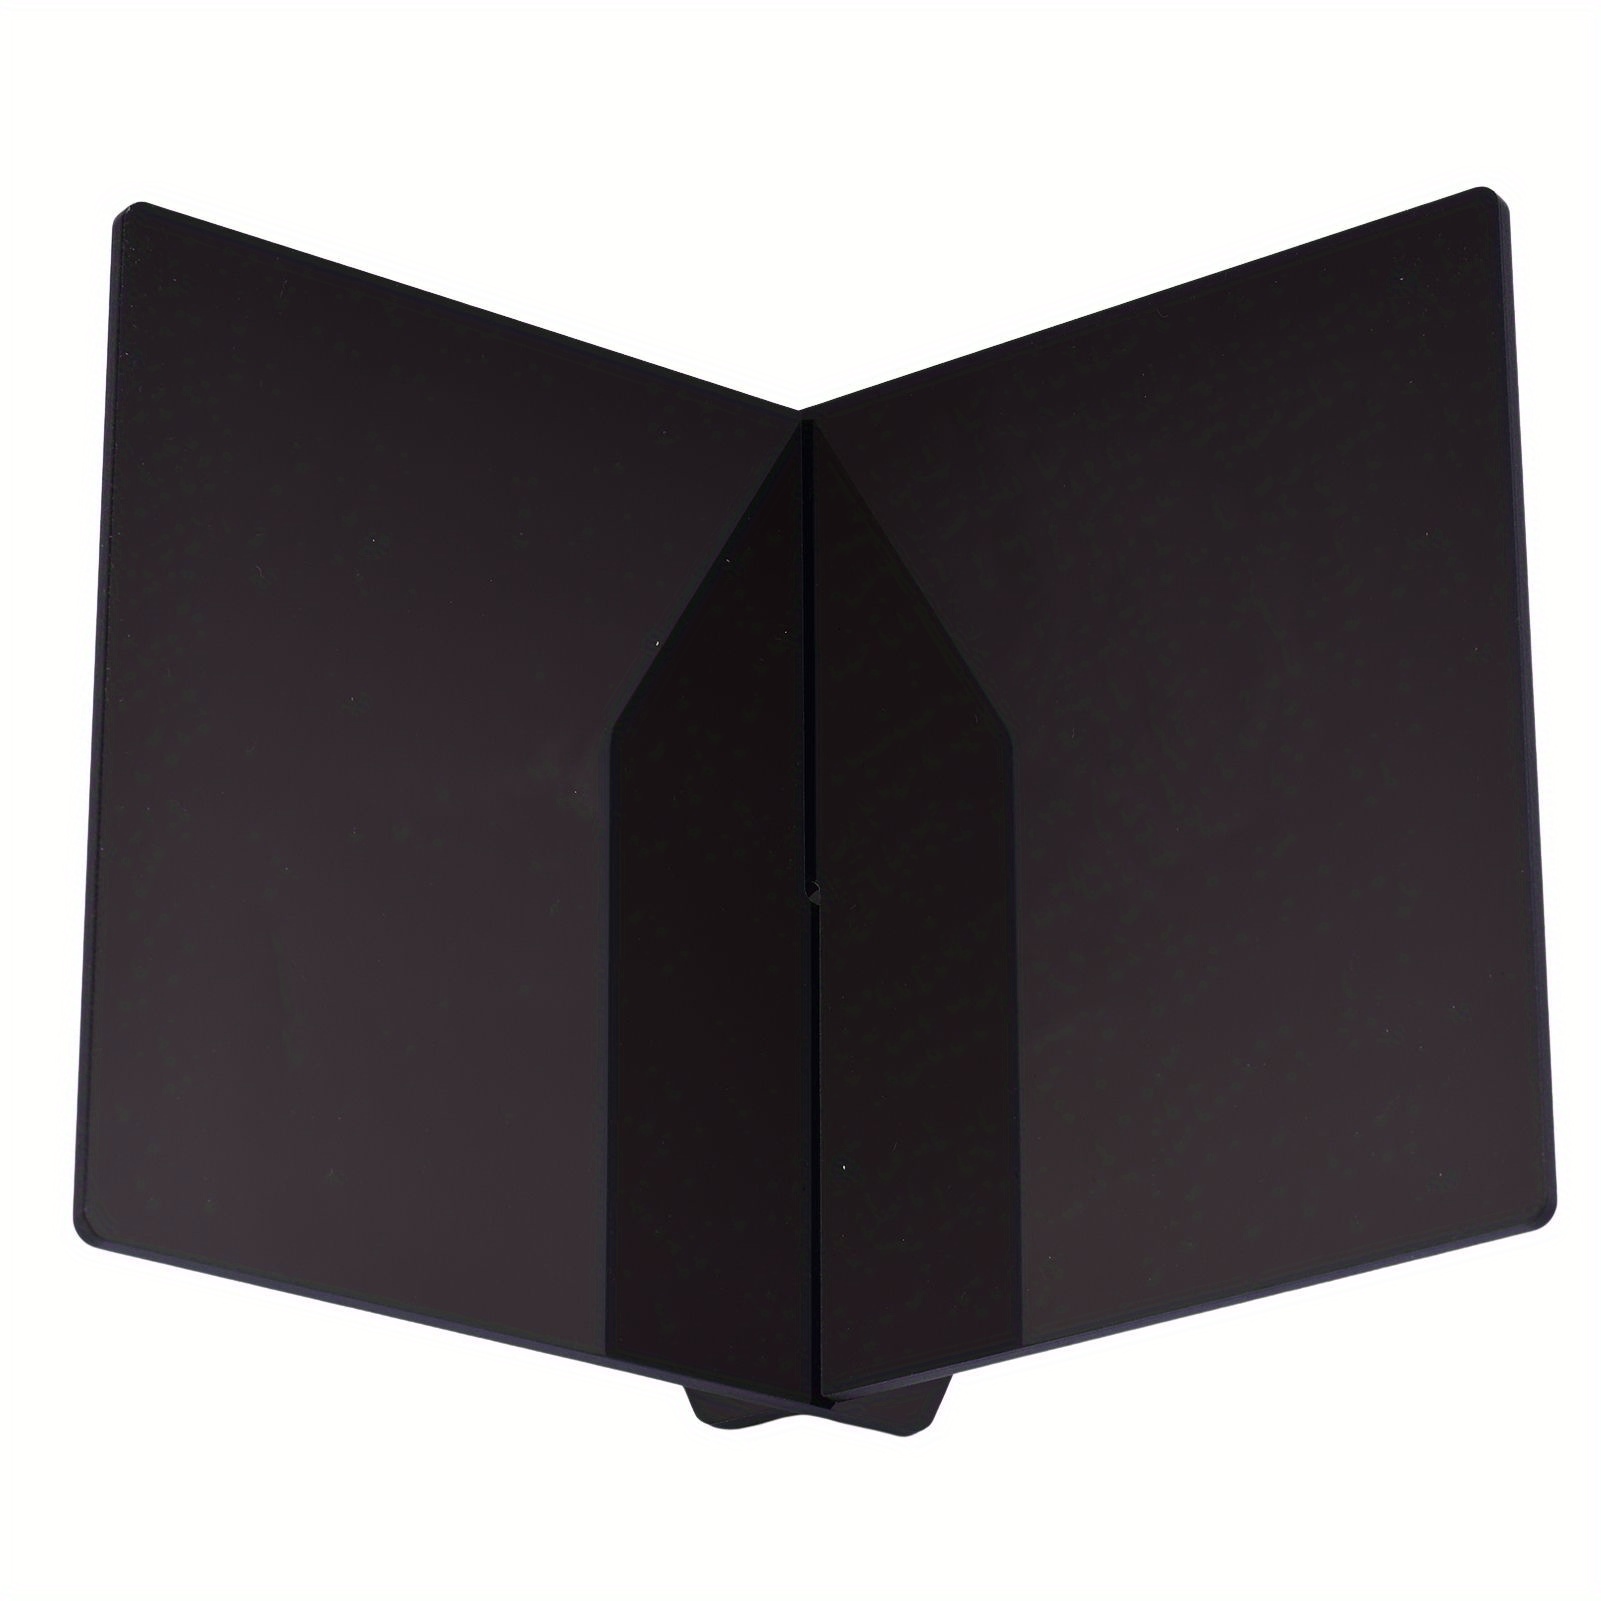 B+L USA Acrylic Book Stand - Black Gloss Acrylic Book Display Stand -  Premium Clear Acrylic Book Display - Acrylic Book Stands for Display -  Acrylic